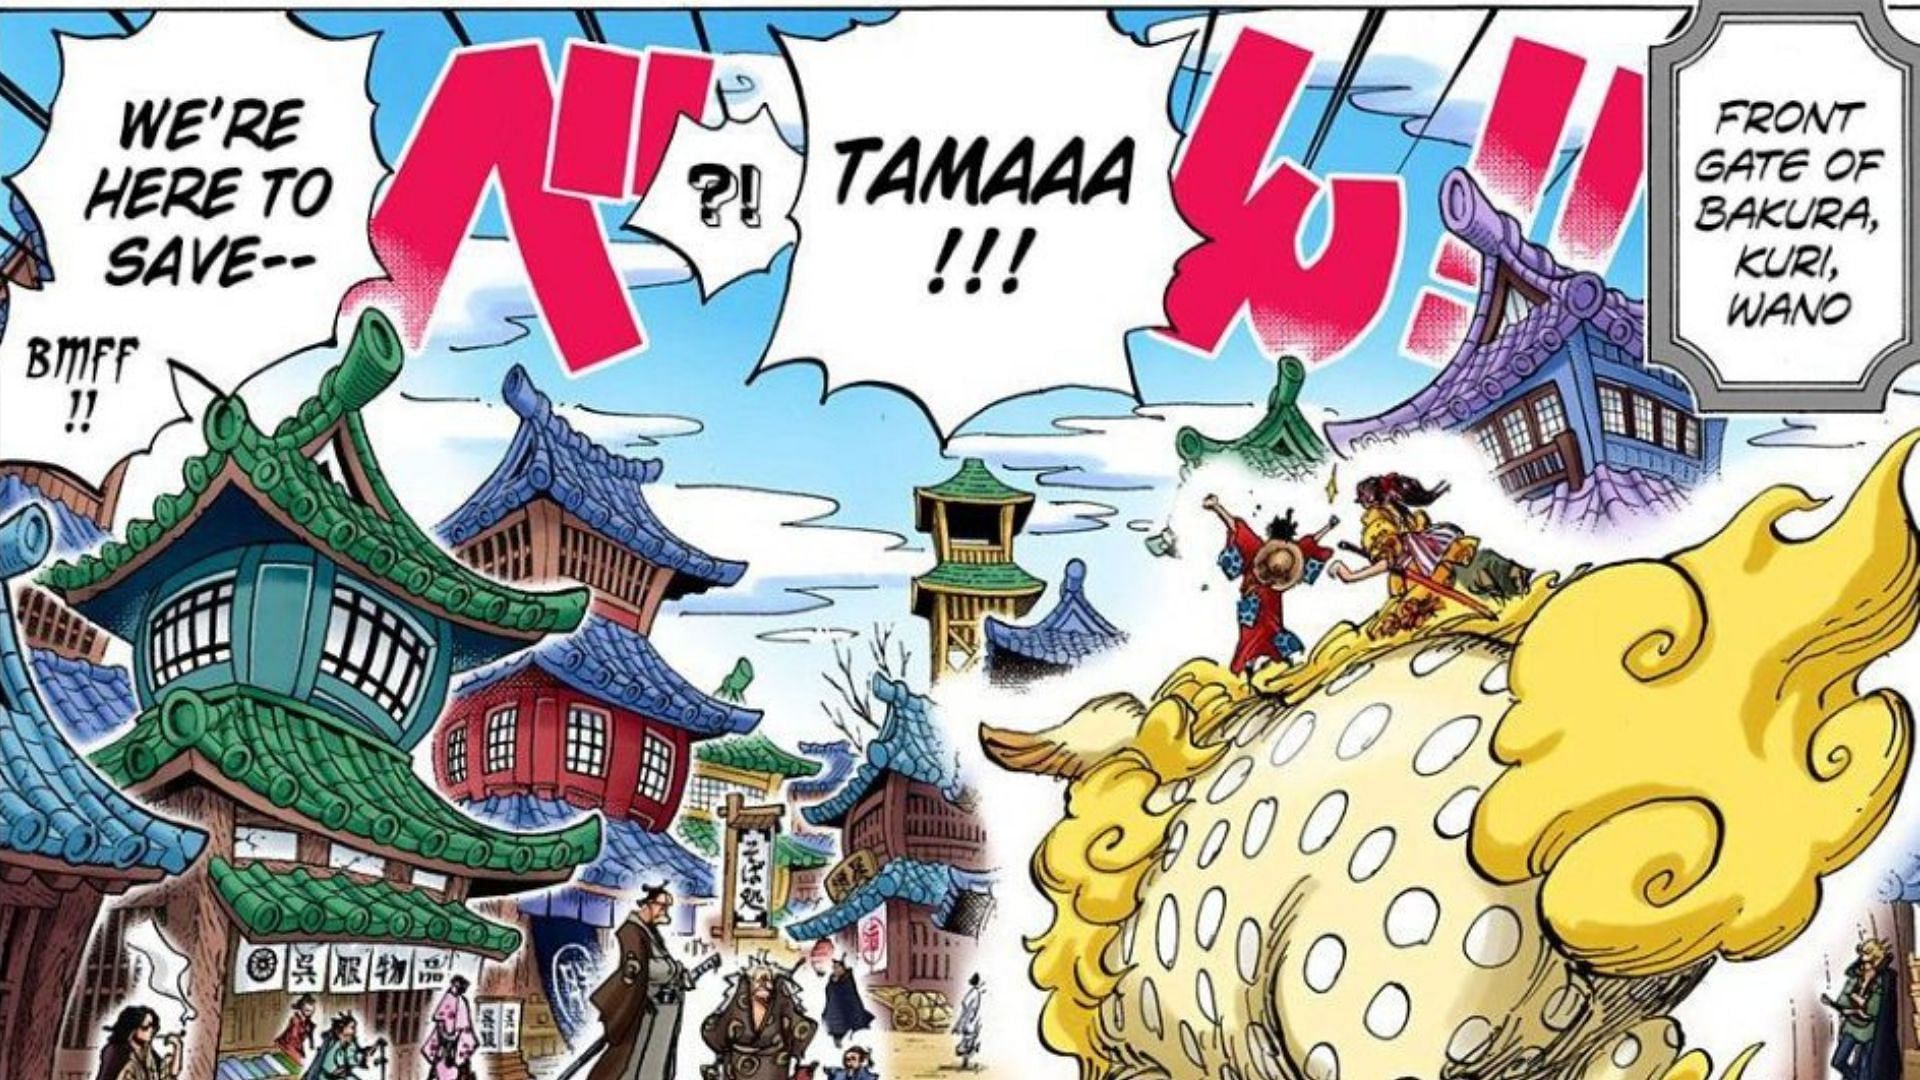 Luffy had traveled to Kuri to save Tama (Image via Shueisha)